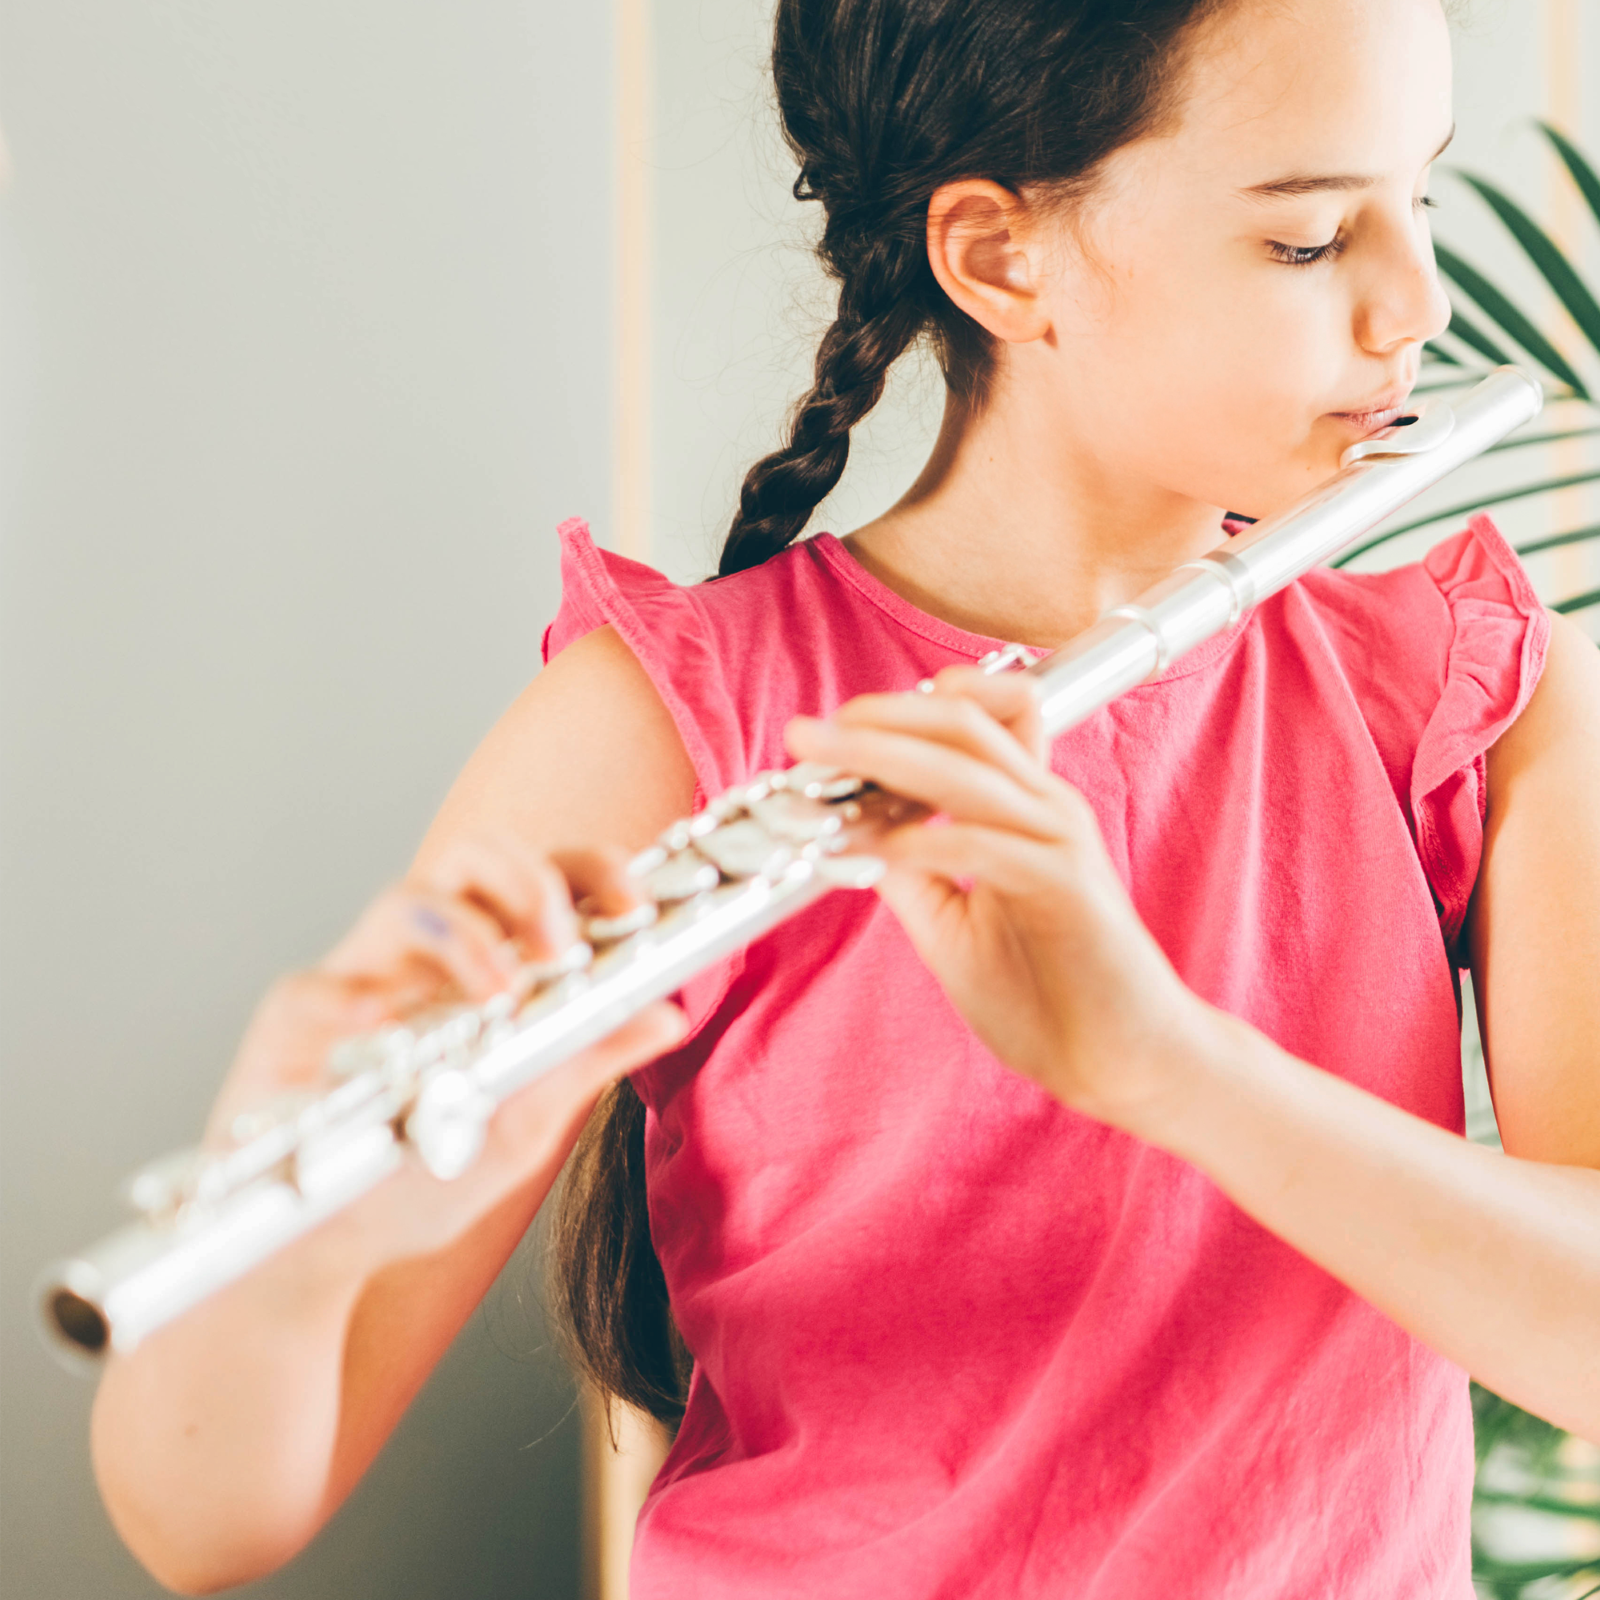 Adult flute lesson 40 minutes : photo 1